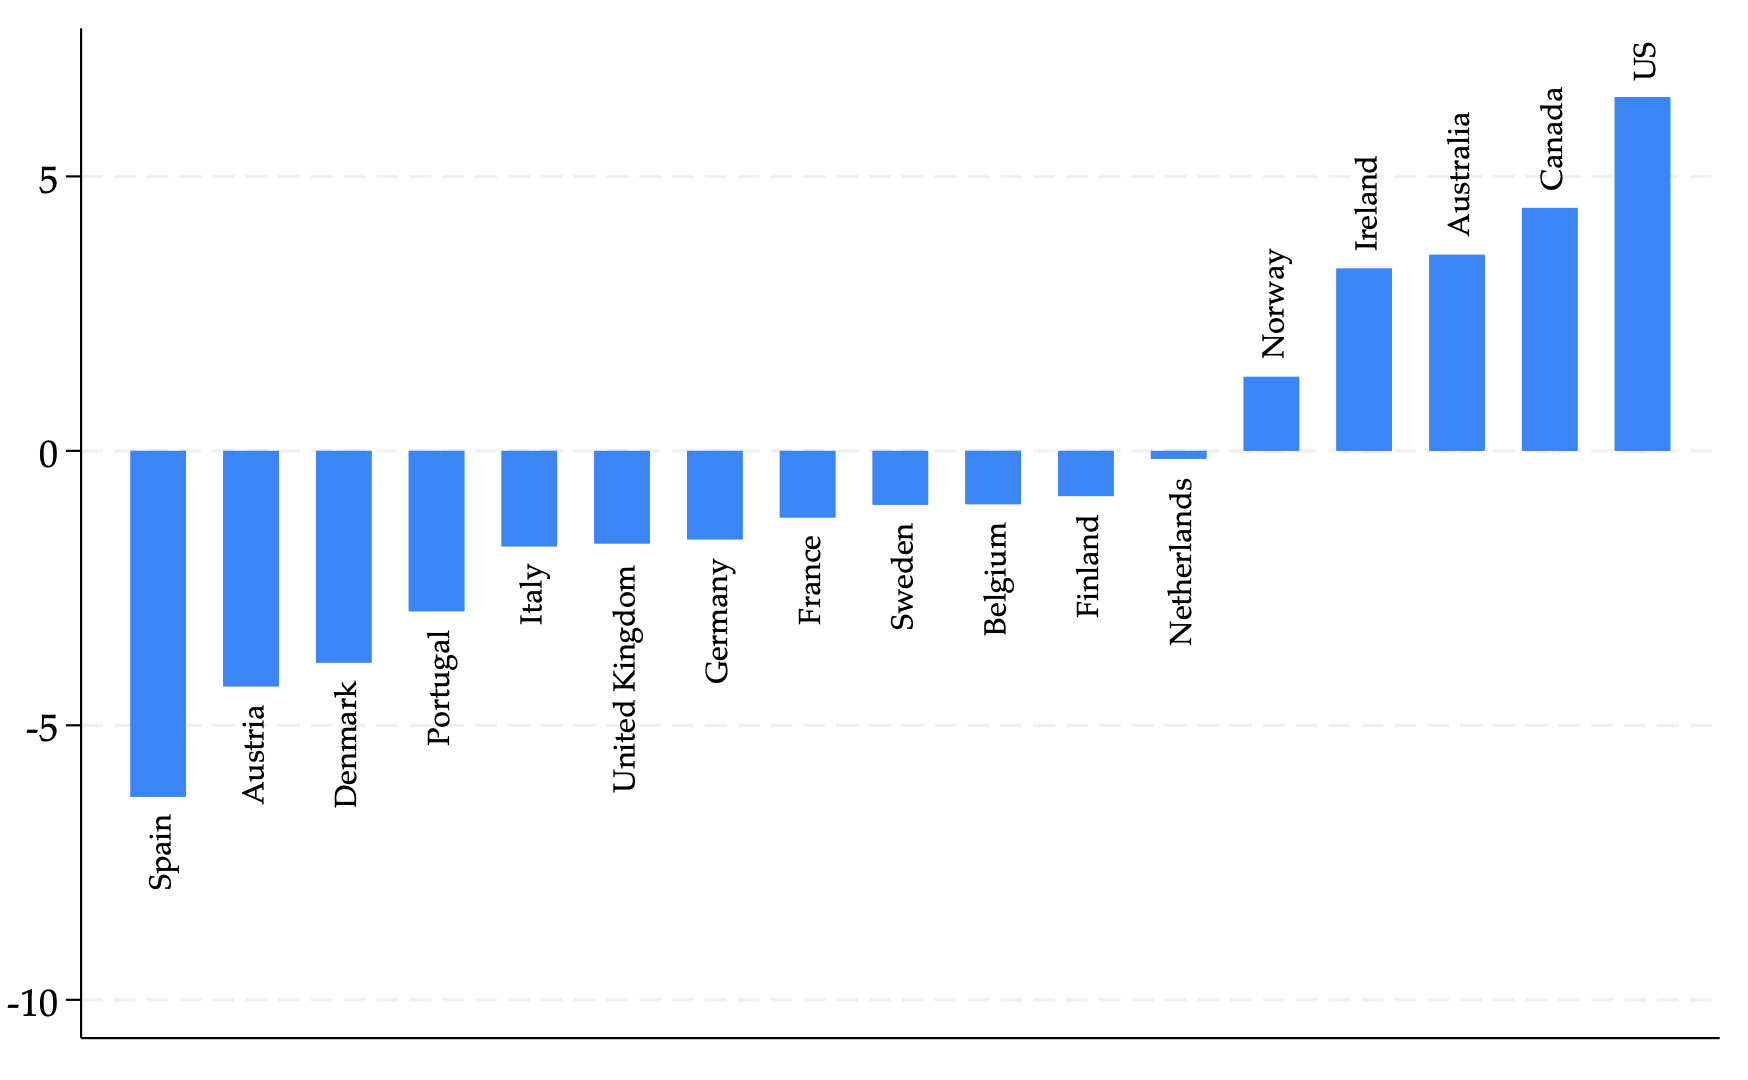 Figure 2 Ranking countries by their RDI gap